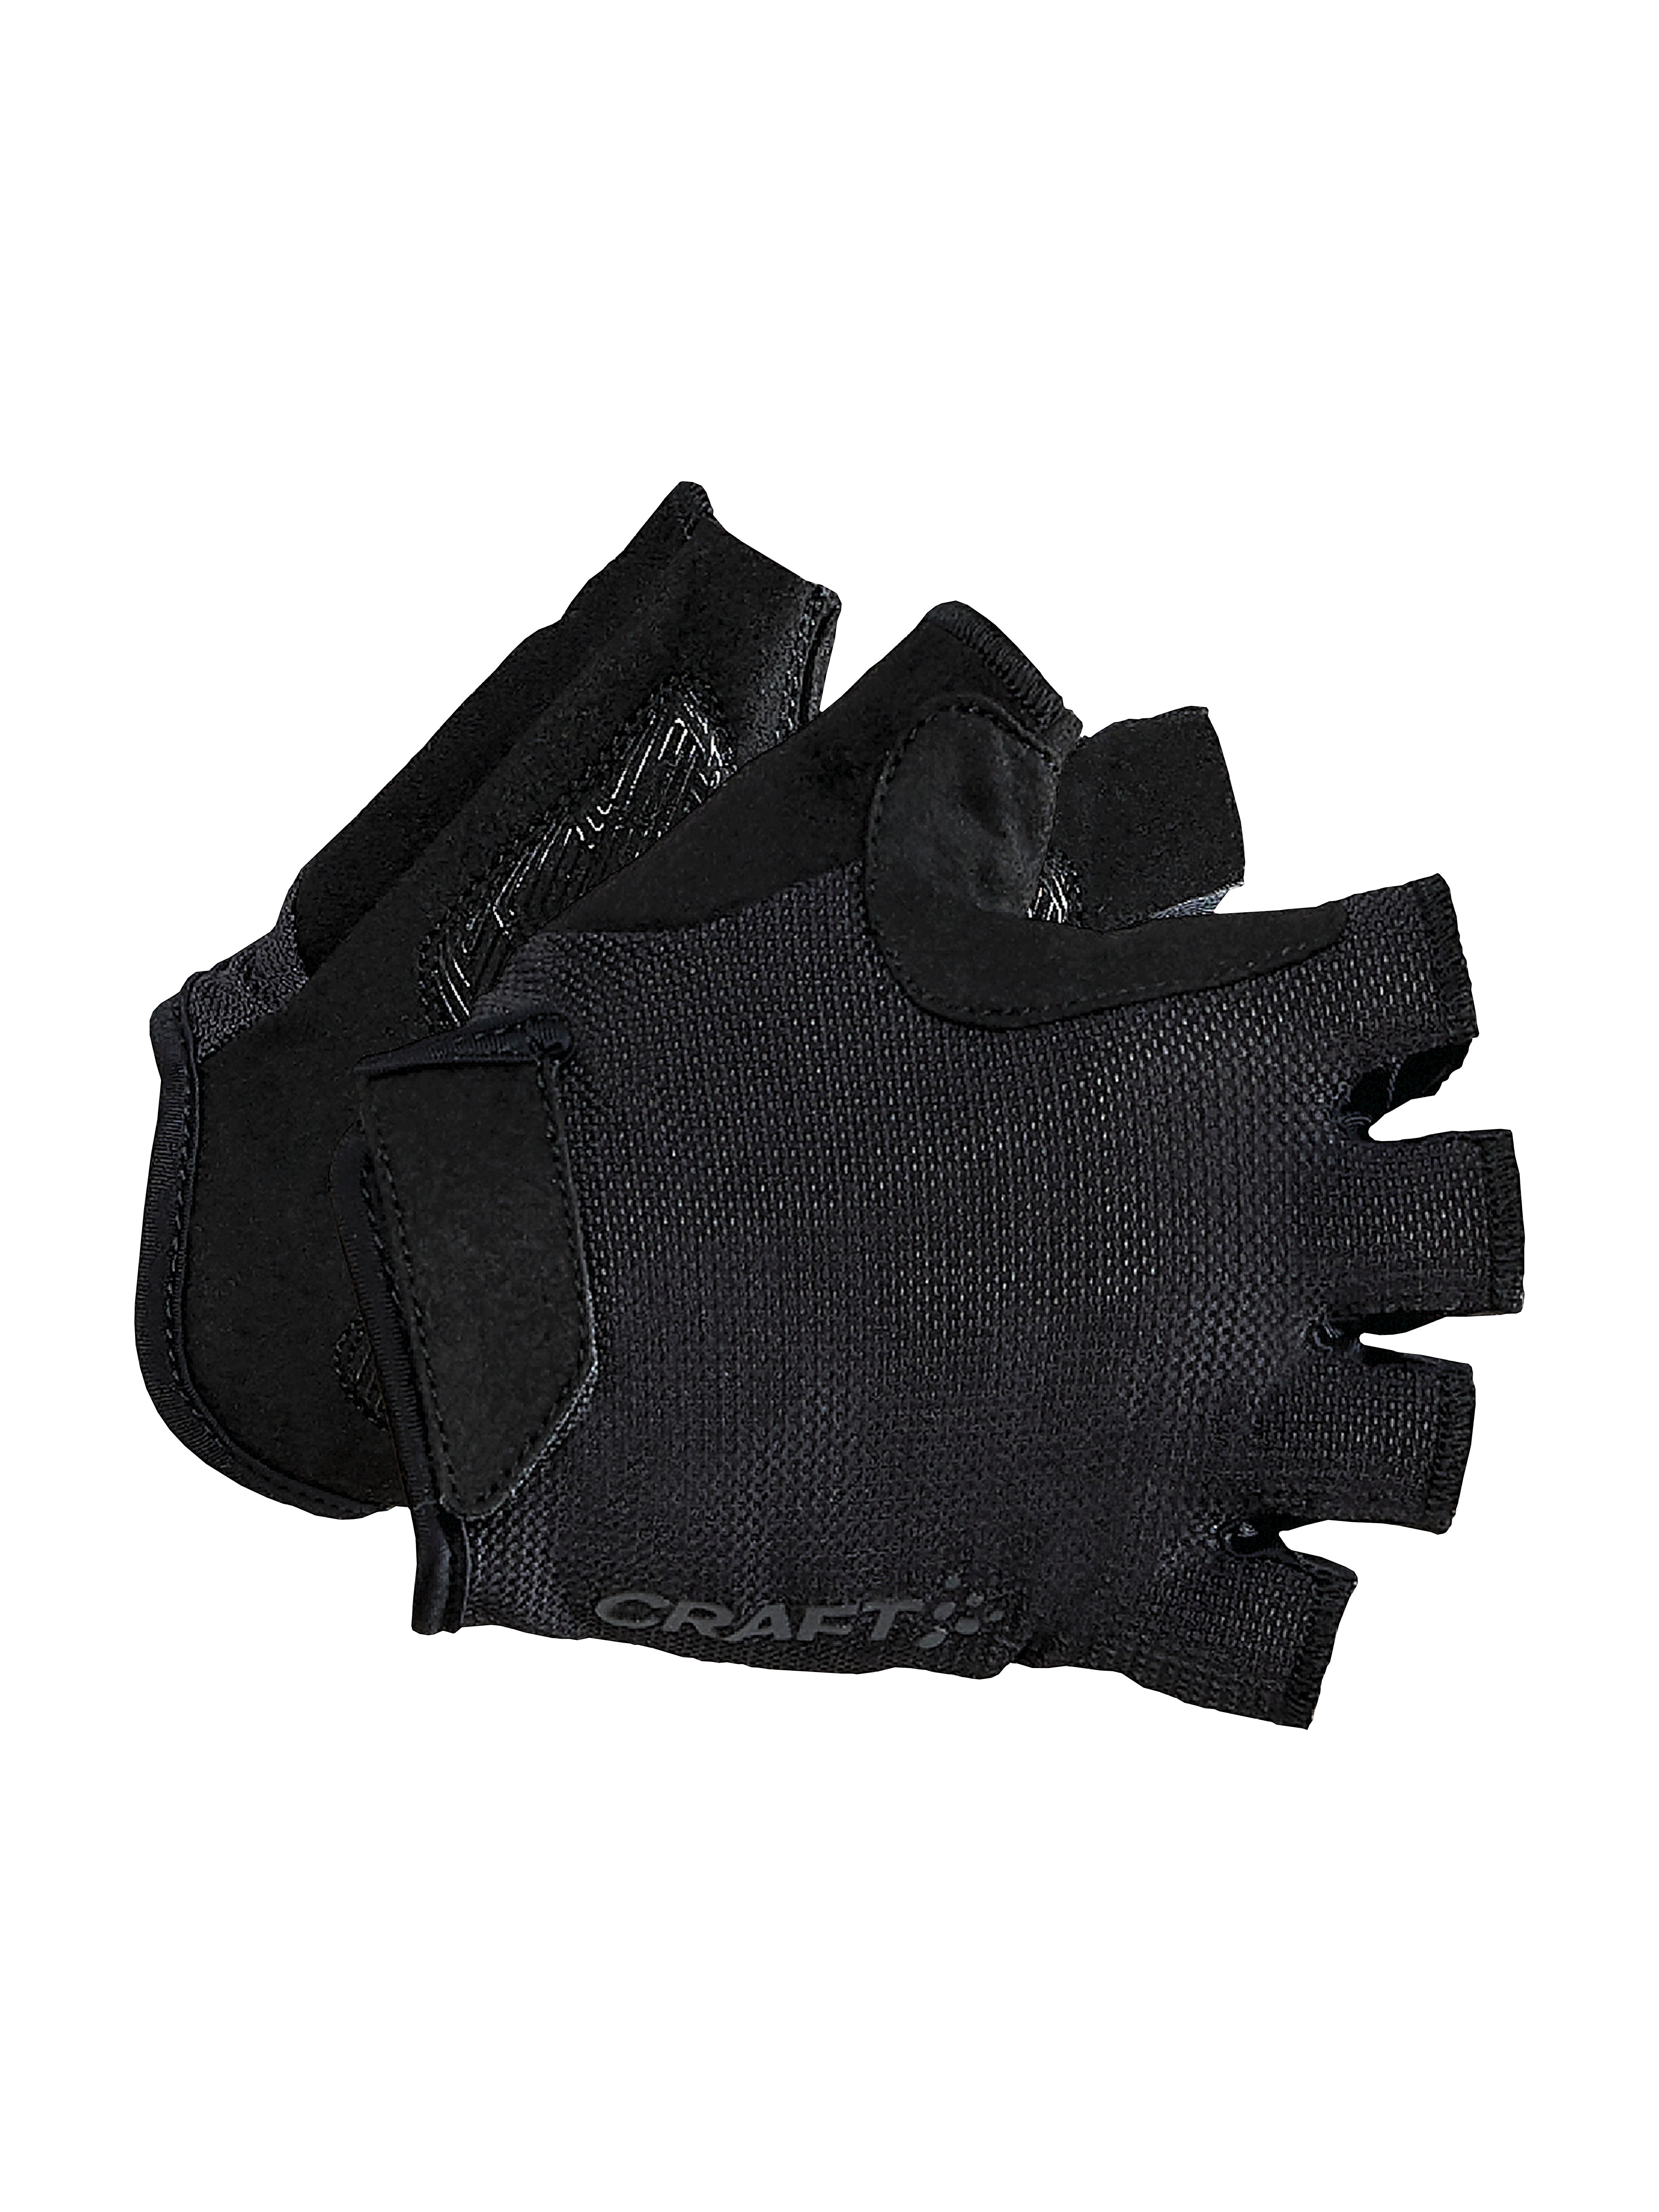 Craft Core Essence Thermal Glove Laufhandschuhe Handschuhe schwarz Gr S-XXL 